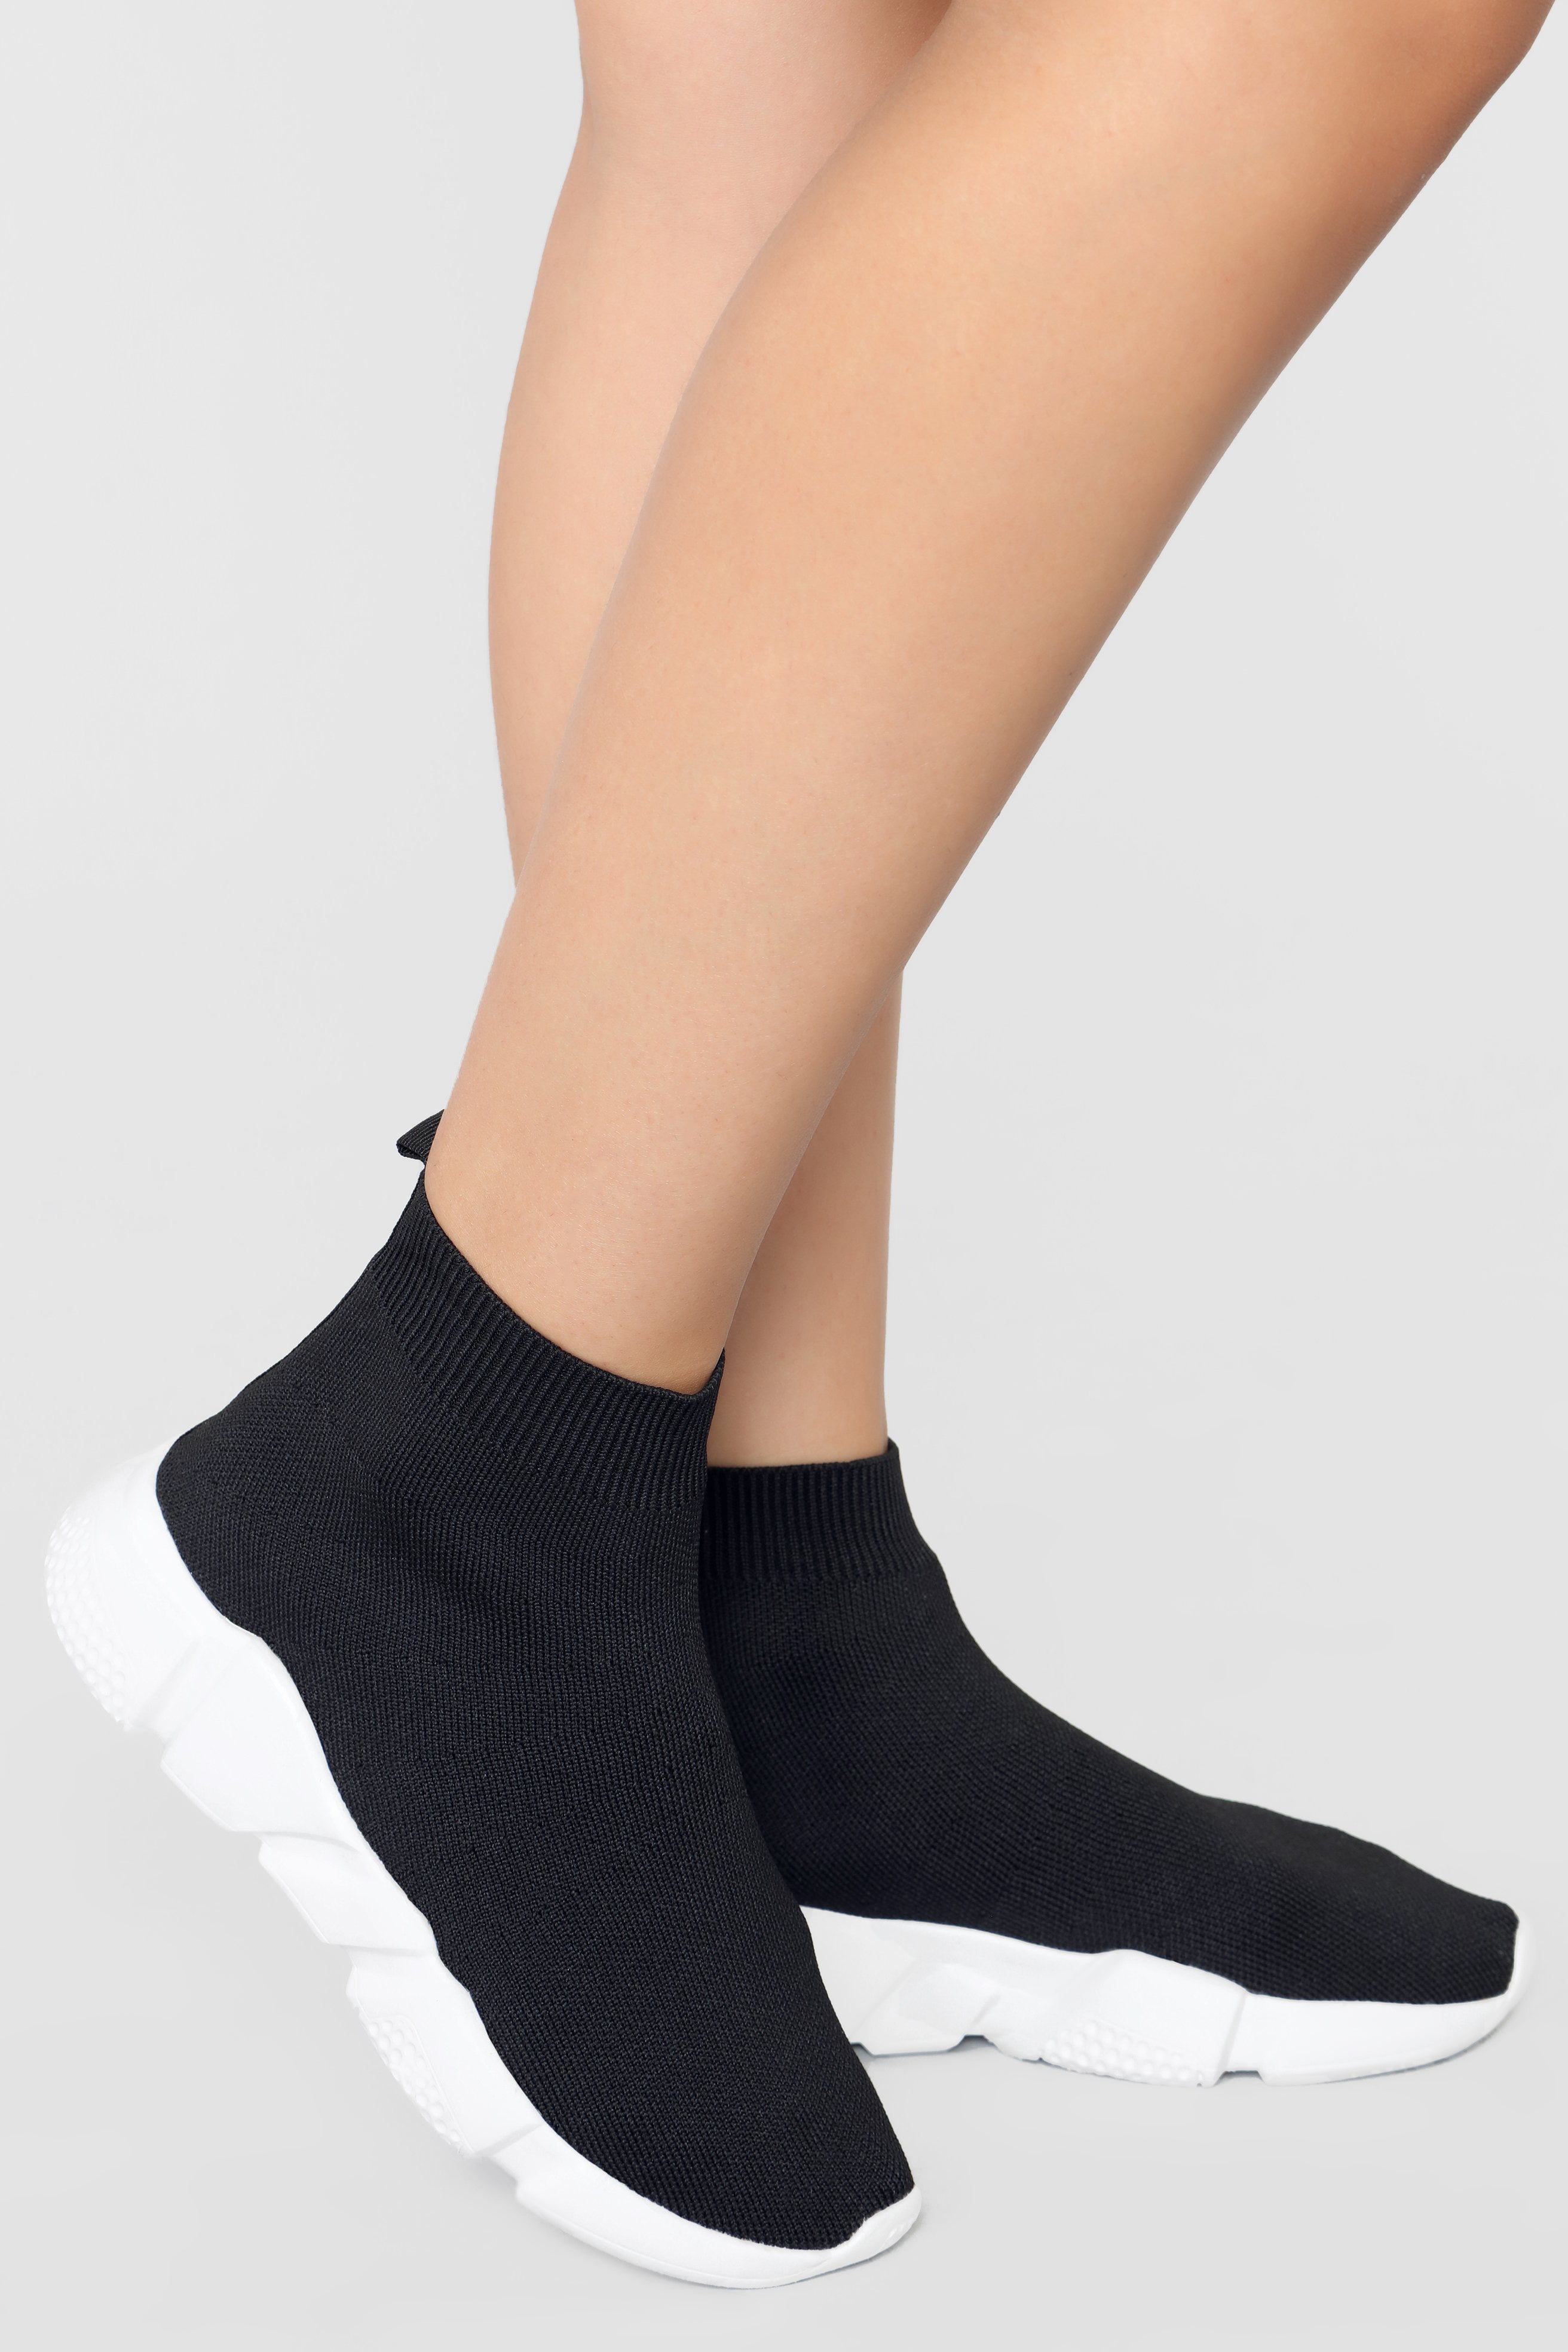 Balenciaga Black Speed Trainer Stretch lady Slip On Sock Sneakers Size 45  13 US  eBay